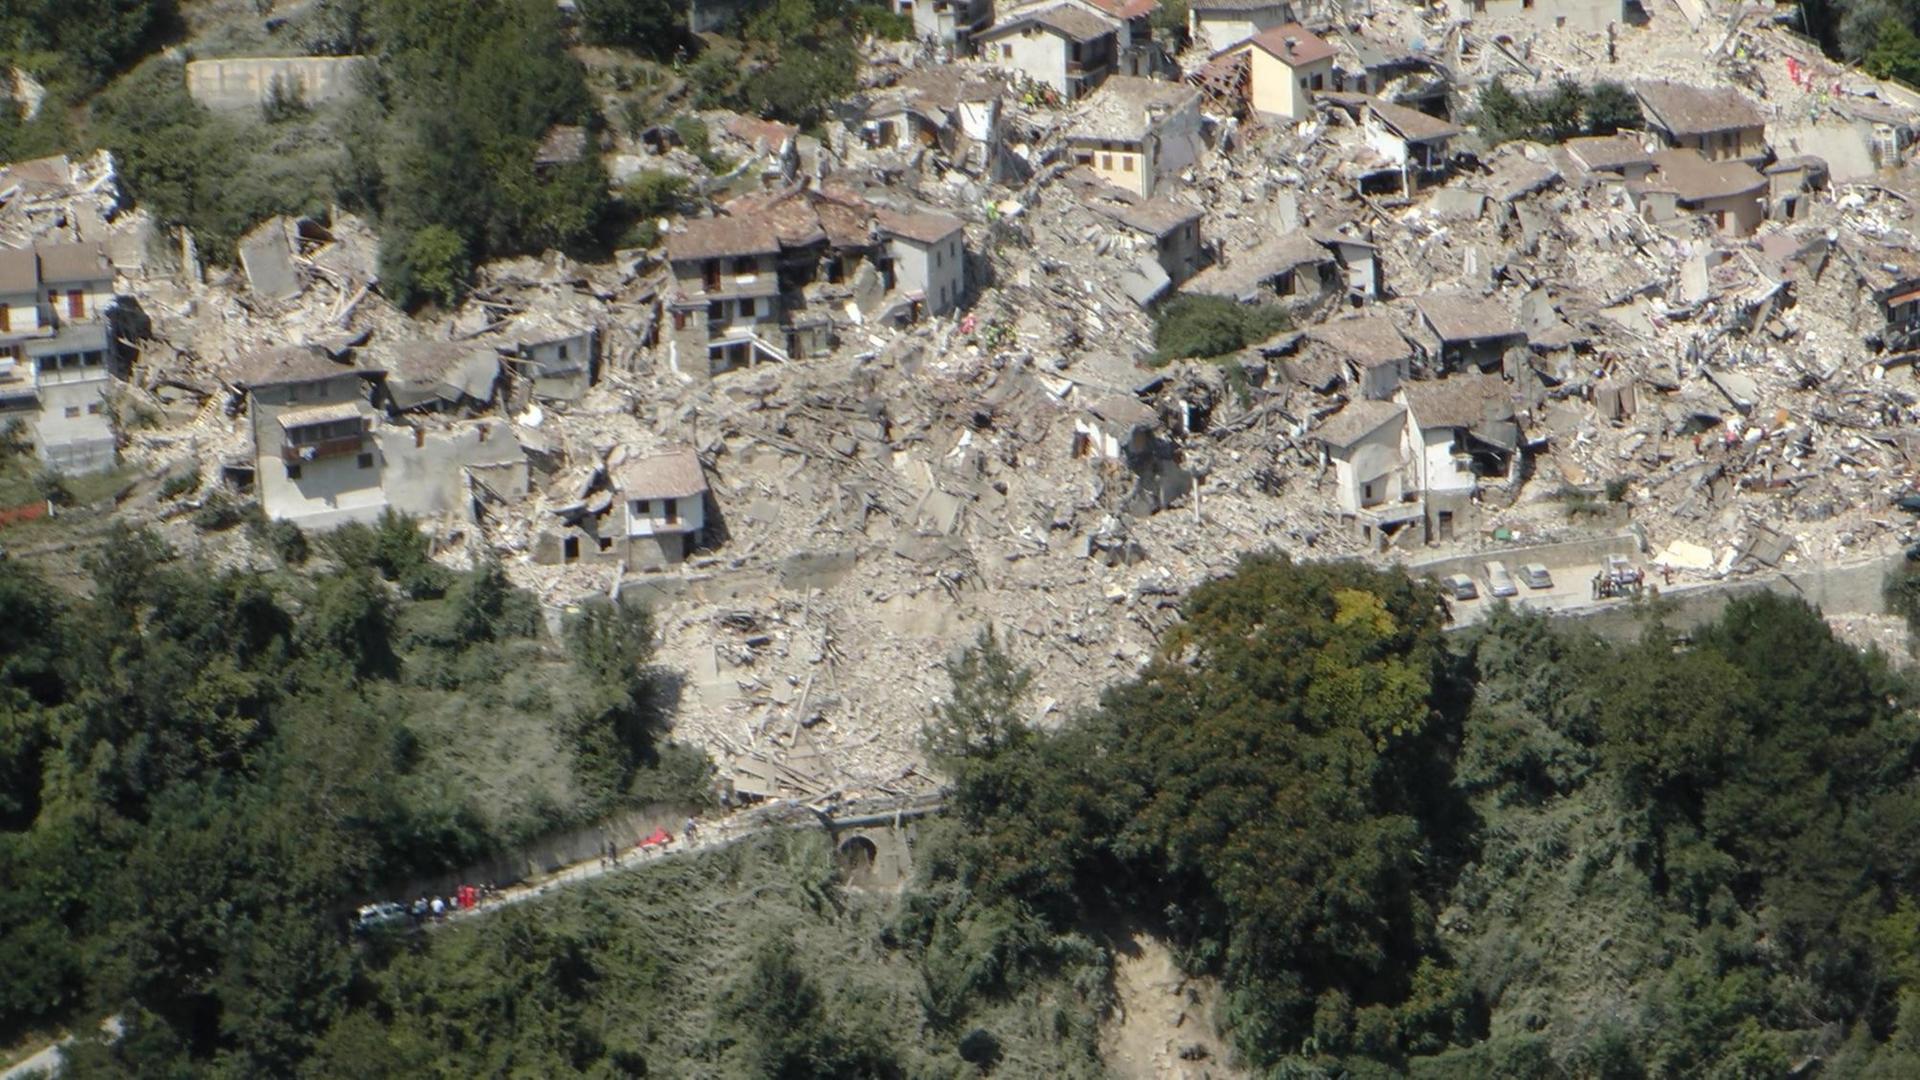 Das Dorf Pescara del Tronto ist bei dem Erd-Beben fast völlig zerstört worden.